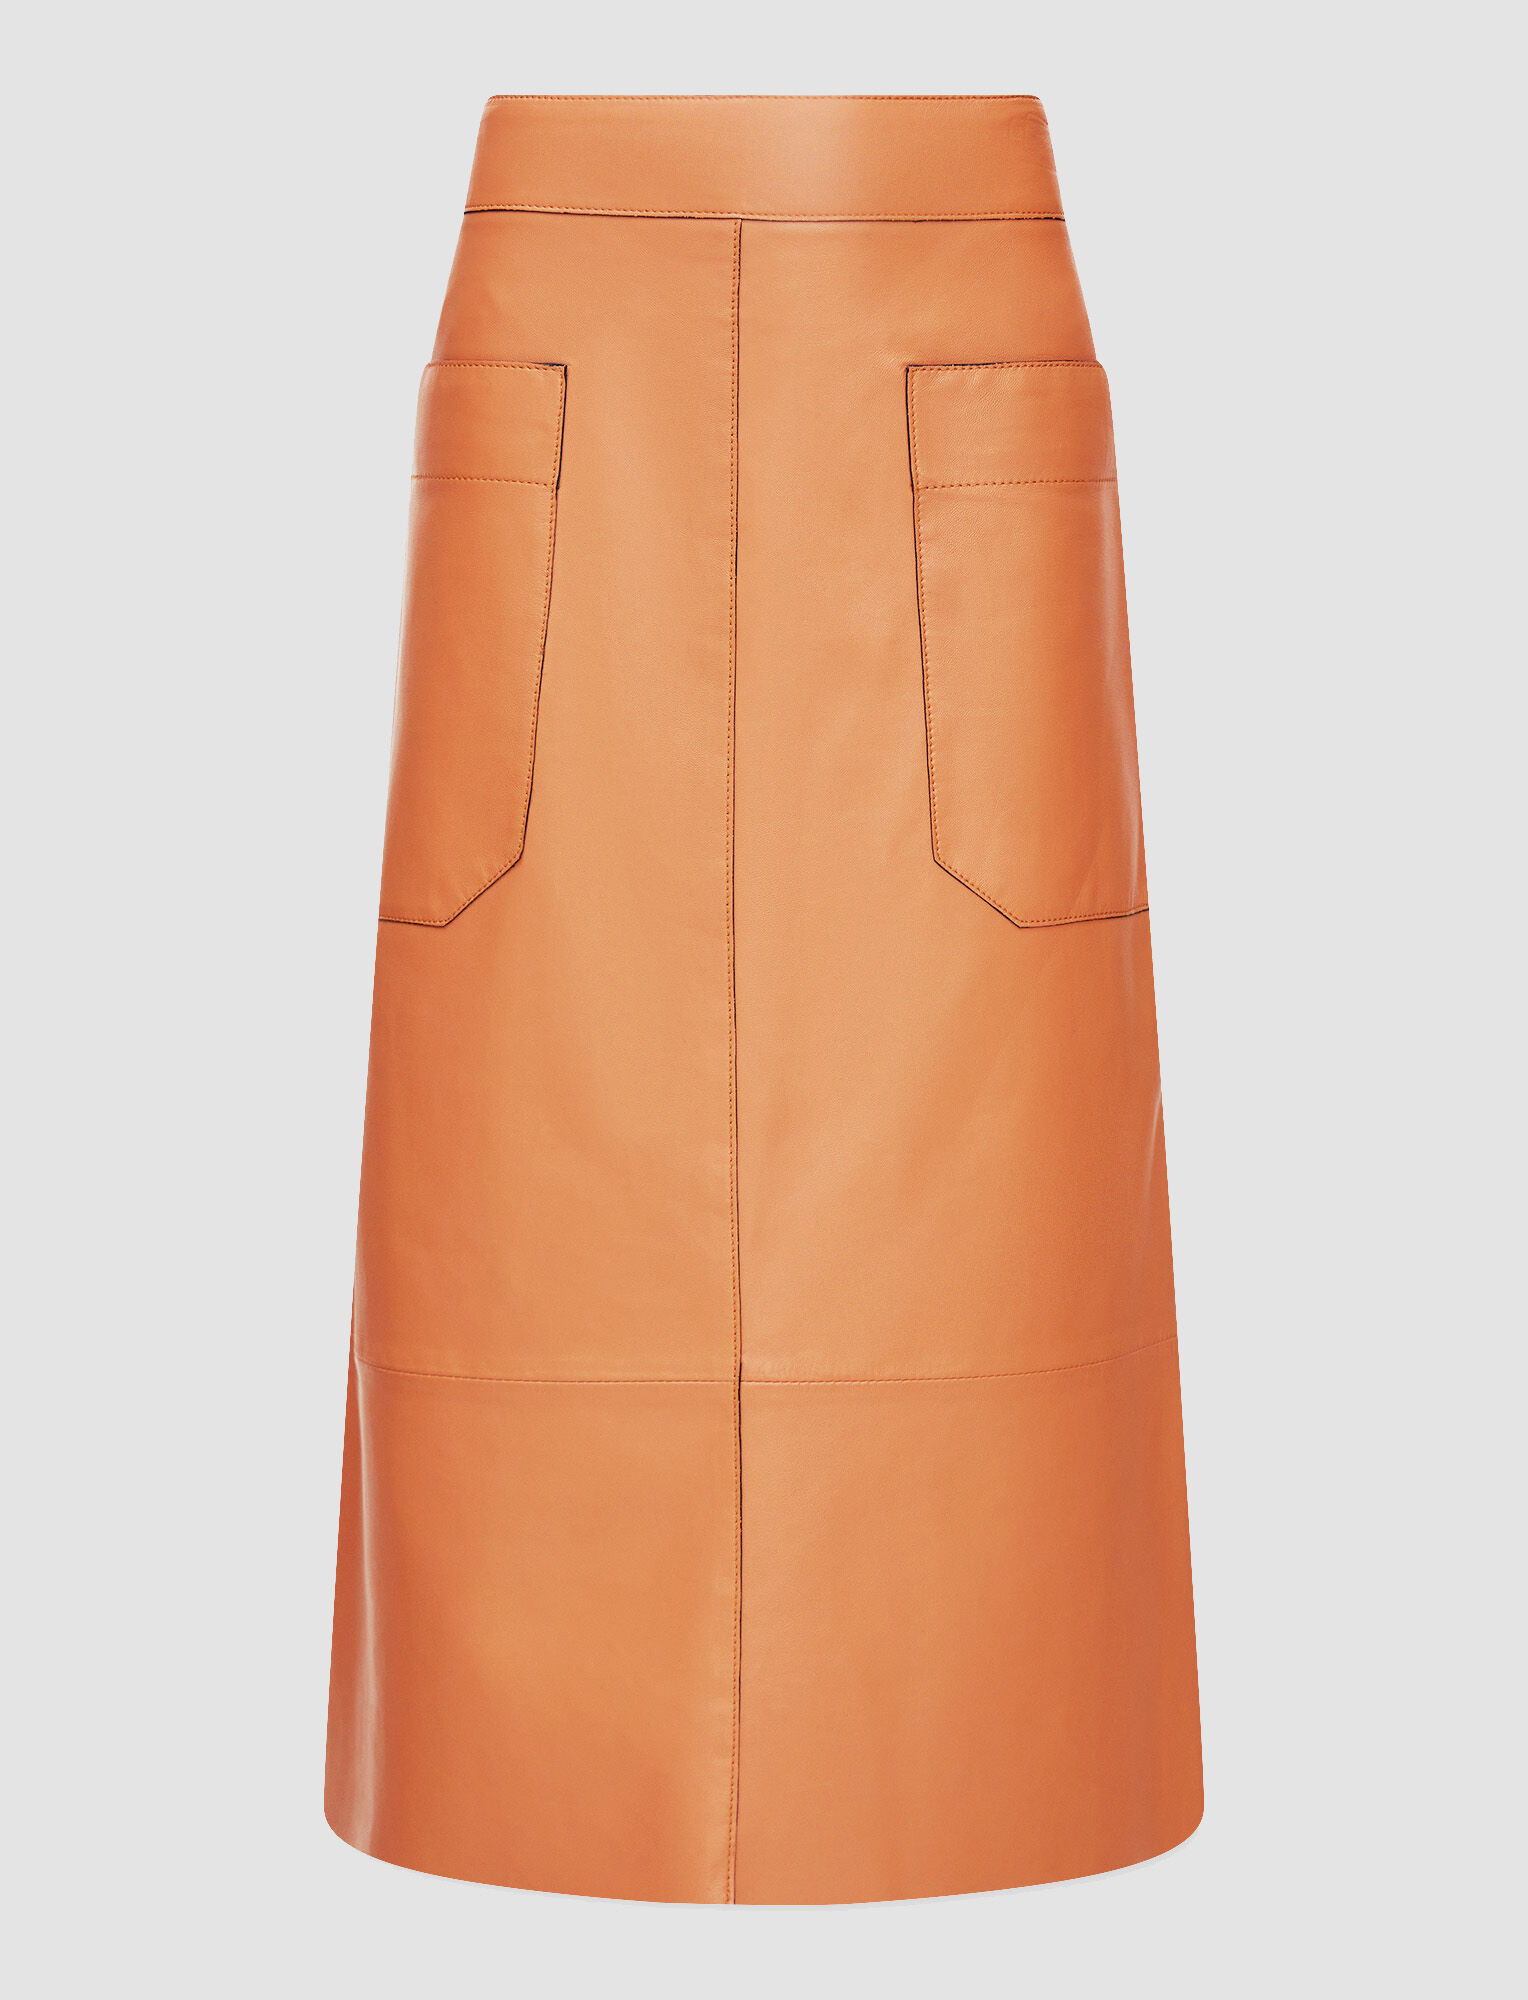 Joseph, Nappa Leather Blomfield Skirt, in Caramel